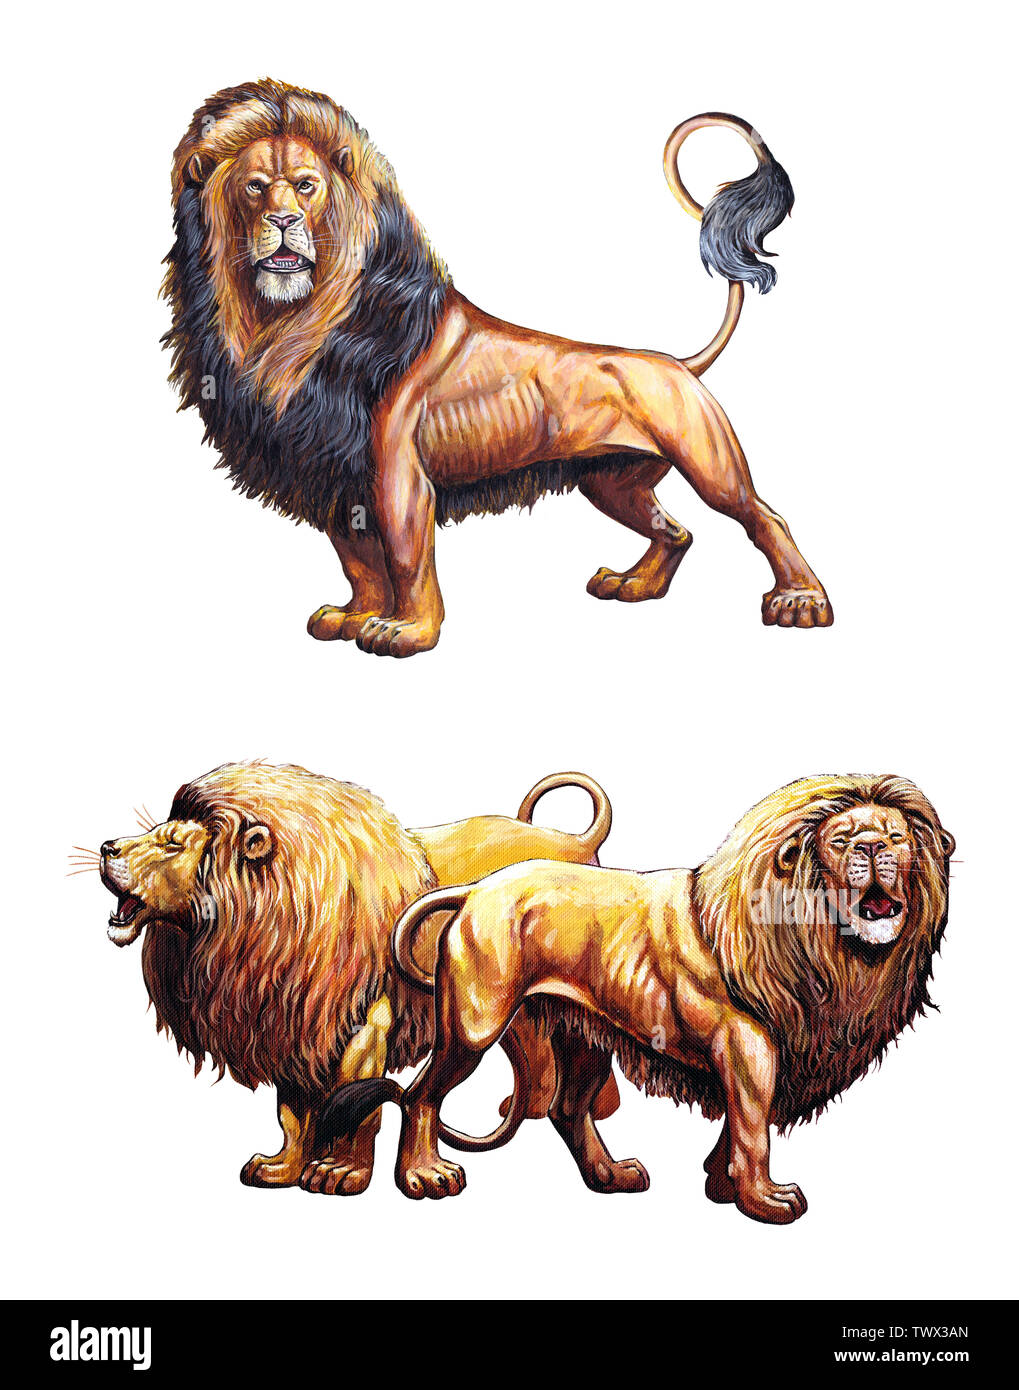 Roaring lion. 2 Lions illustrations. Big cat acrylic illustration. Stock Photo